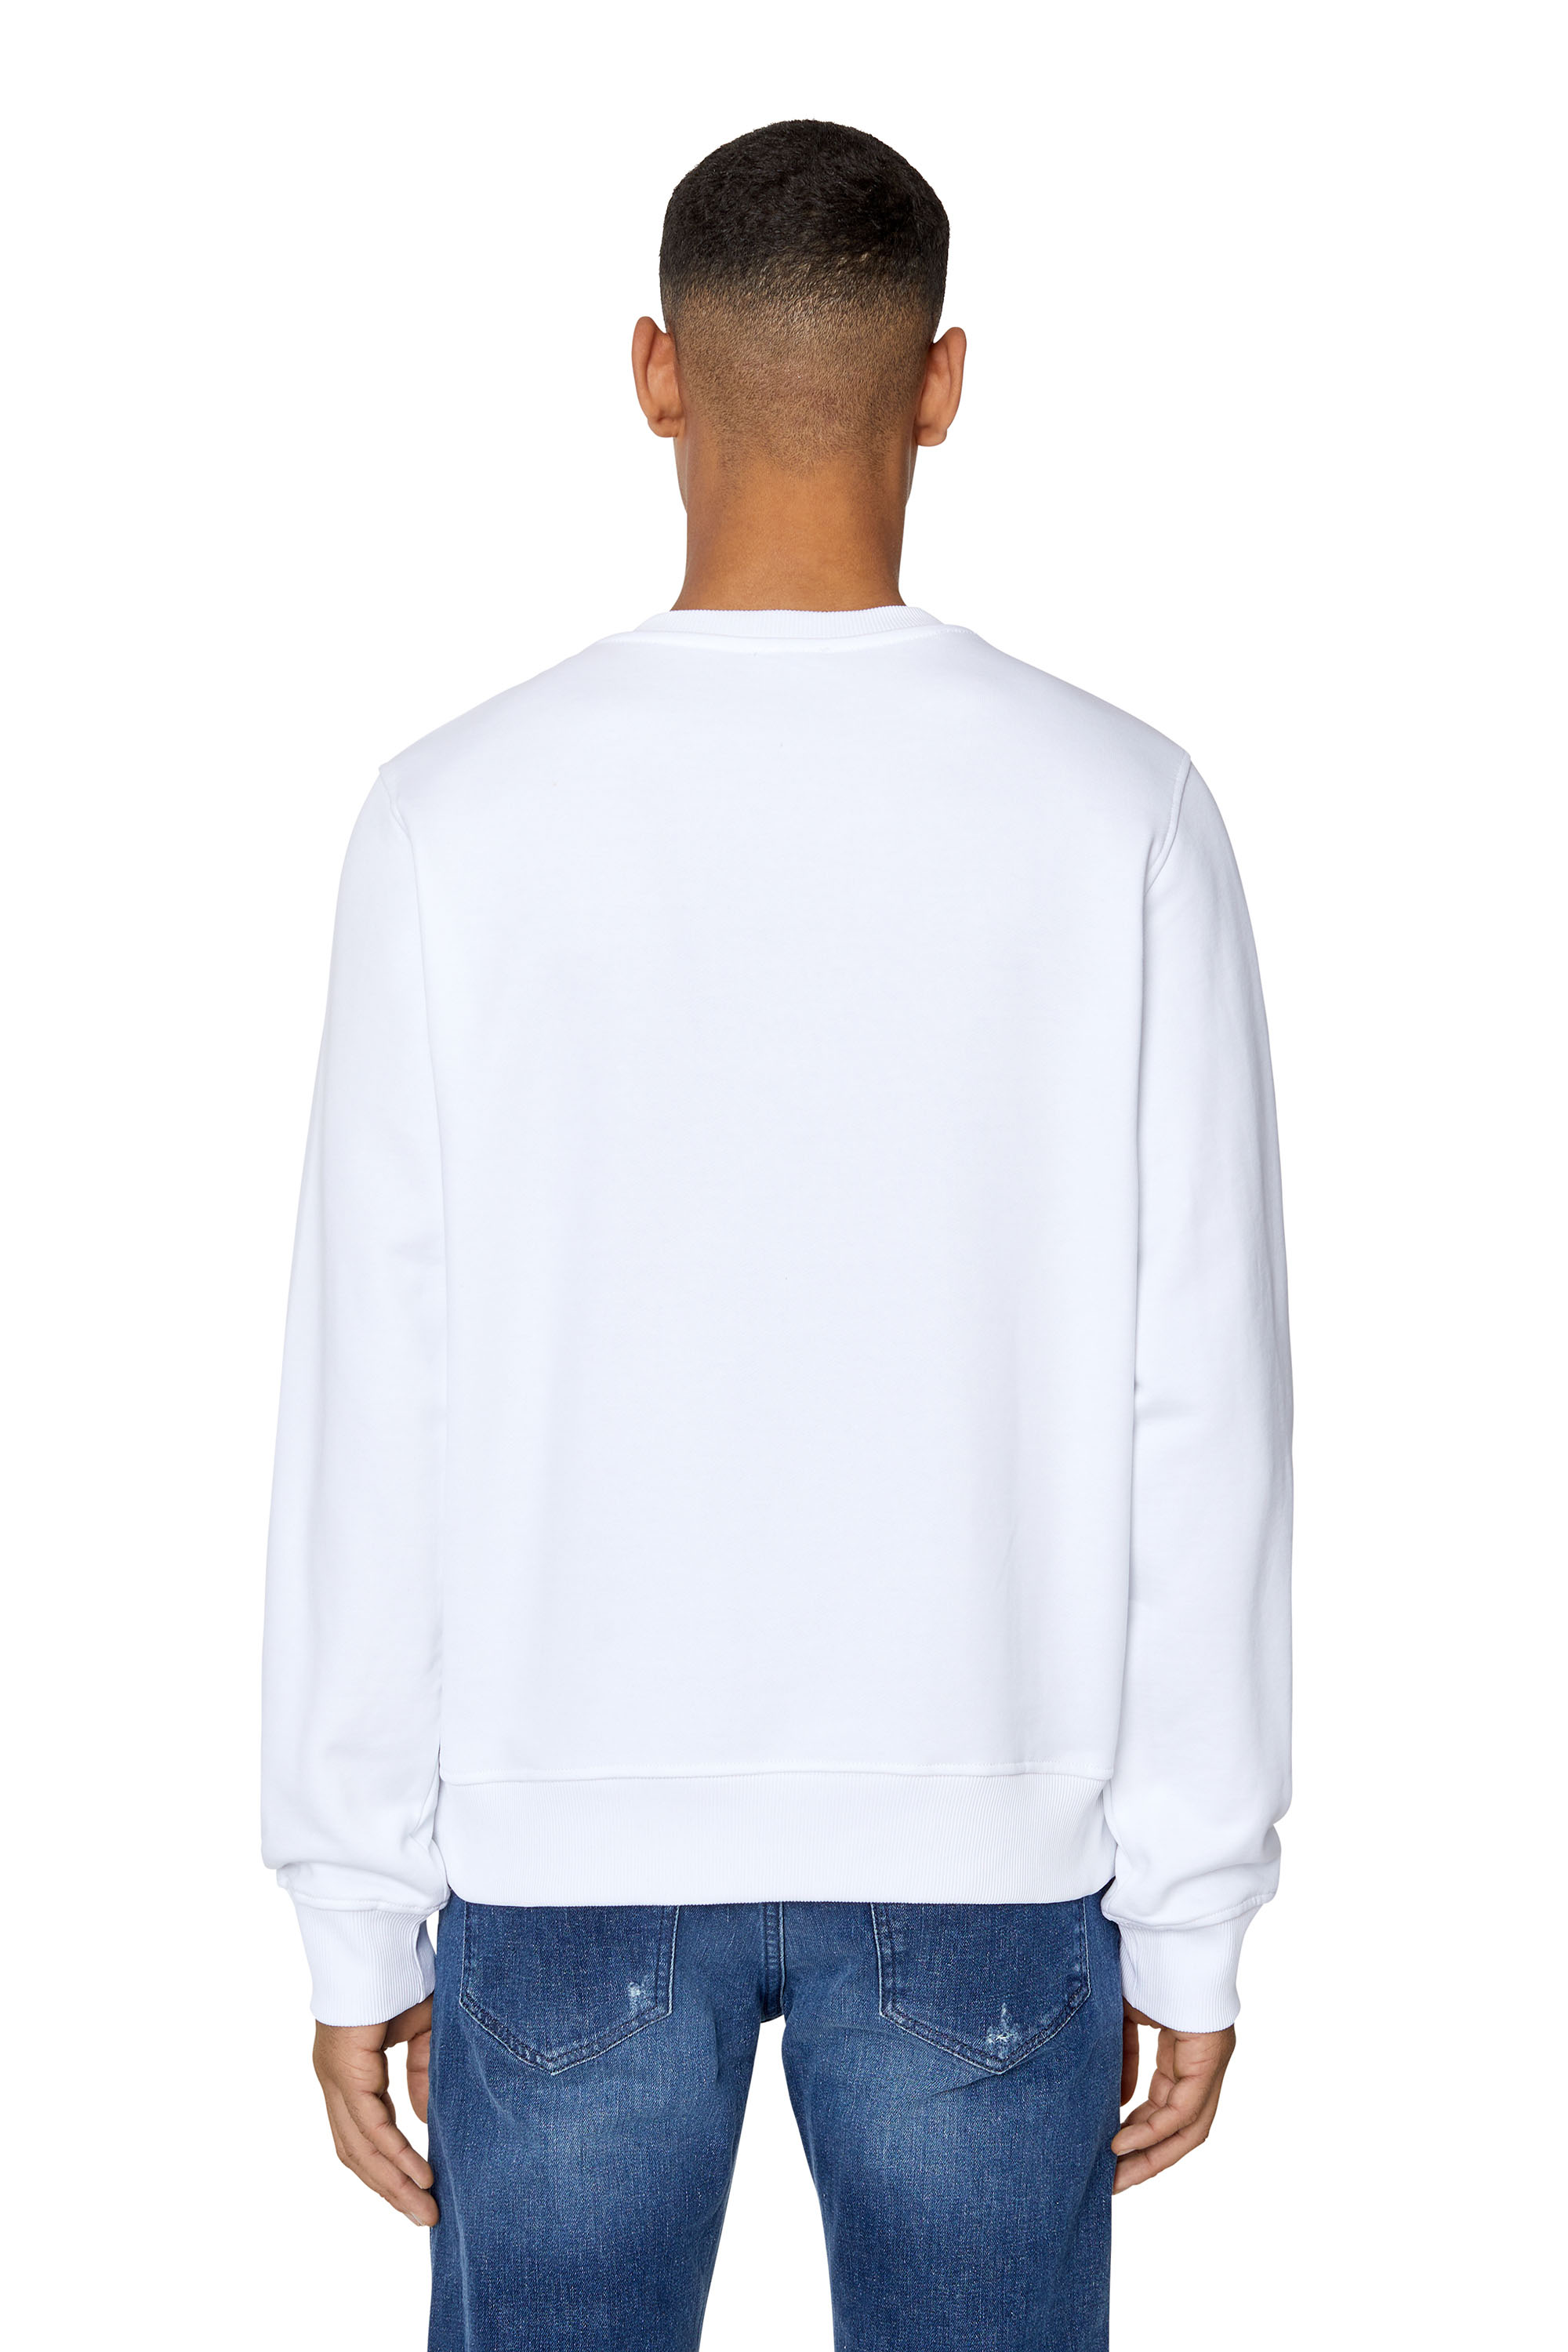 S-GINN-E9 Man: Sweatshirt with peel-effect logo print | Diesel